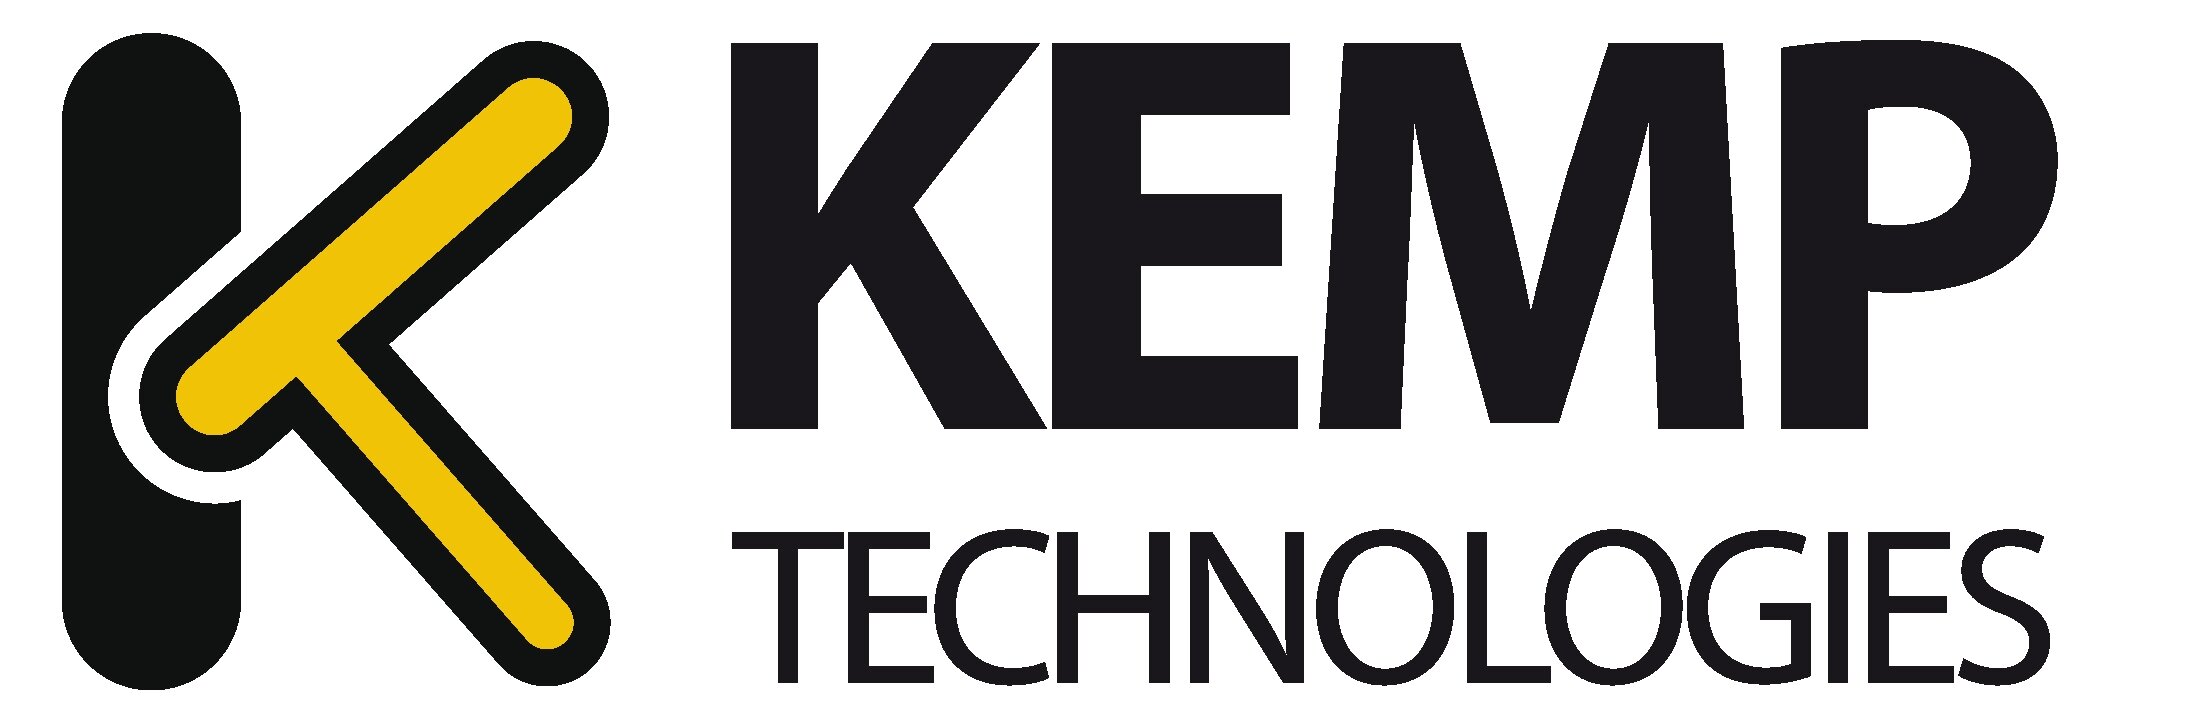 Kemp_Logo_Wiki.jpg